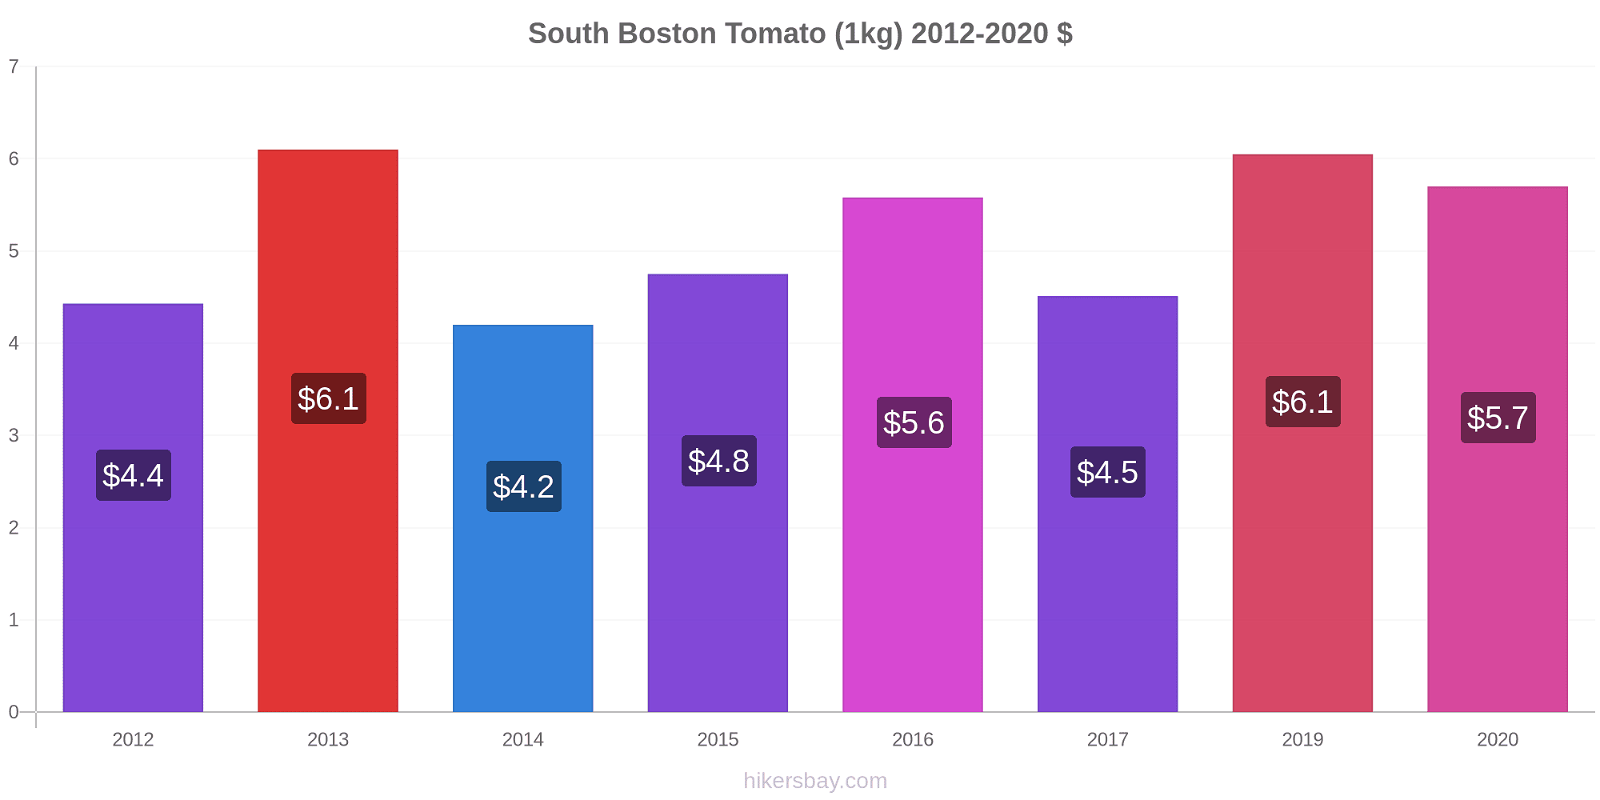 South Boston price changes Tomato (1kg) hikersbay.com